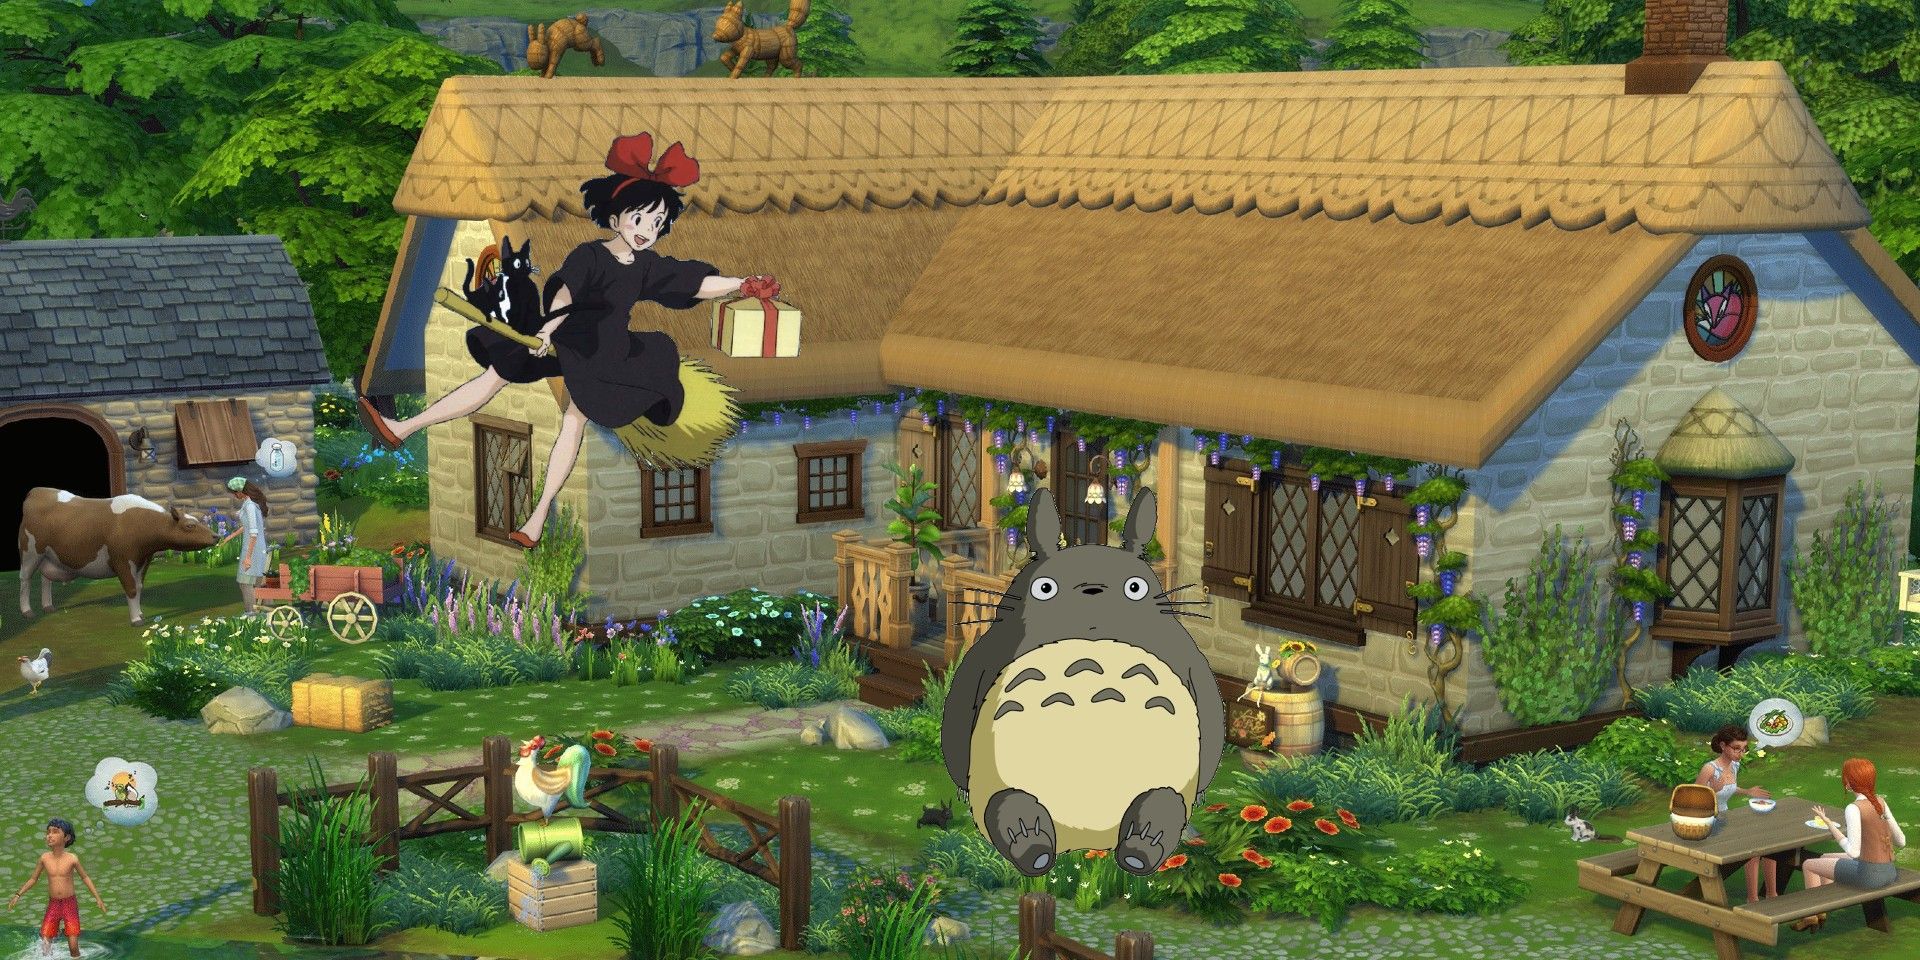 Sims 4 with Studio Ghibli characters.